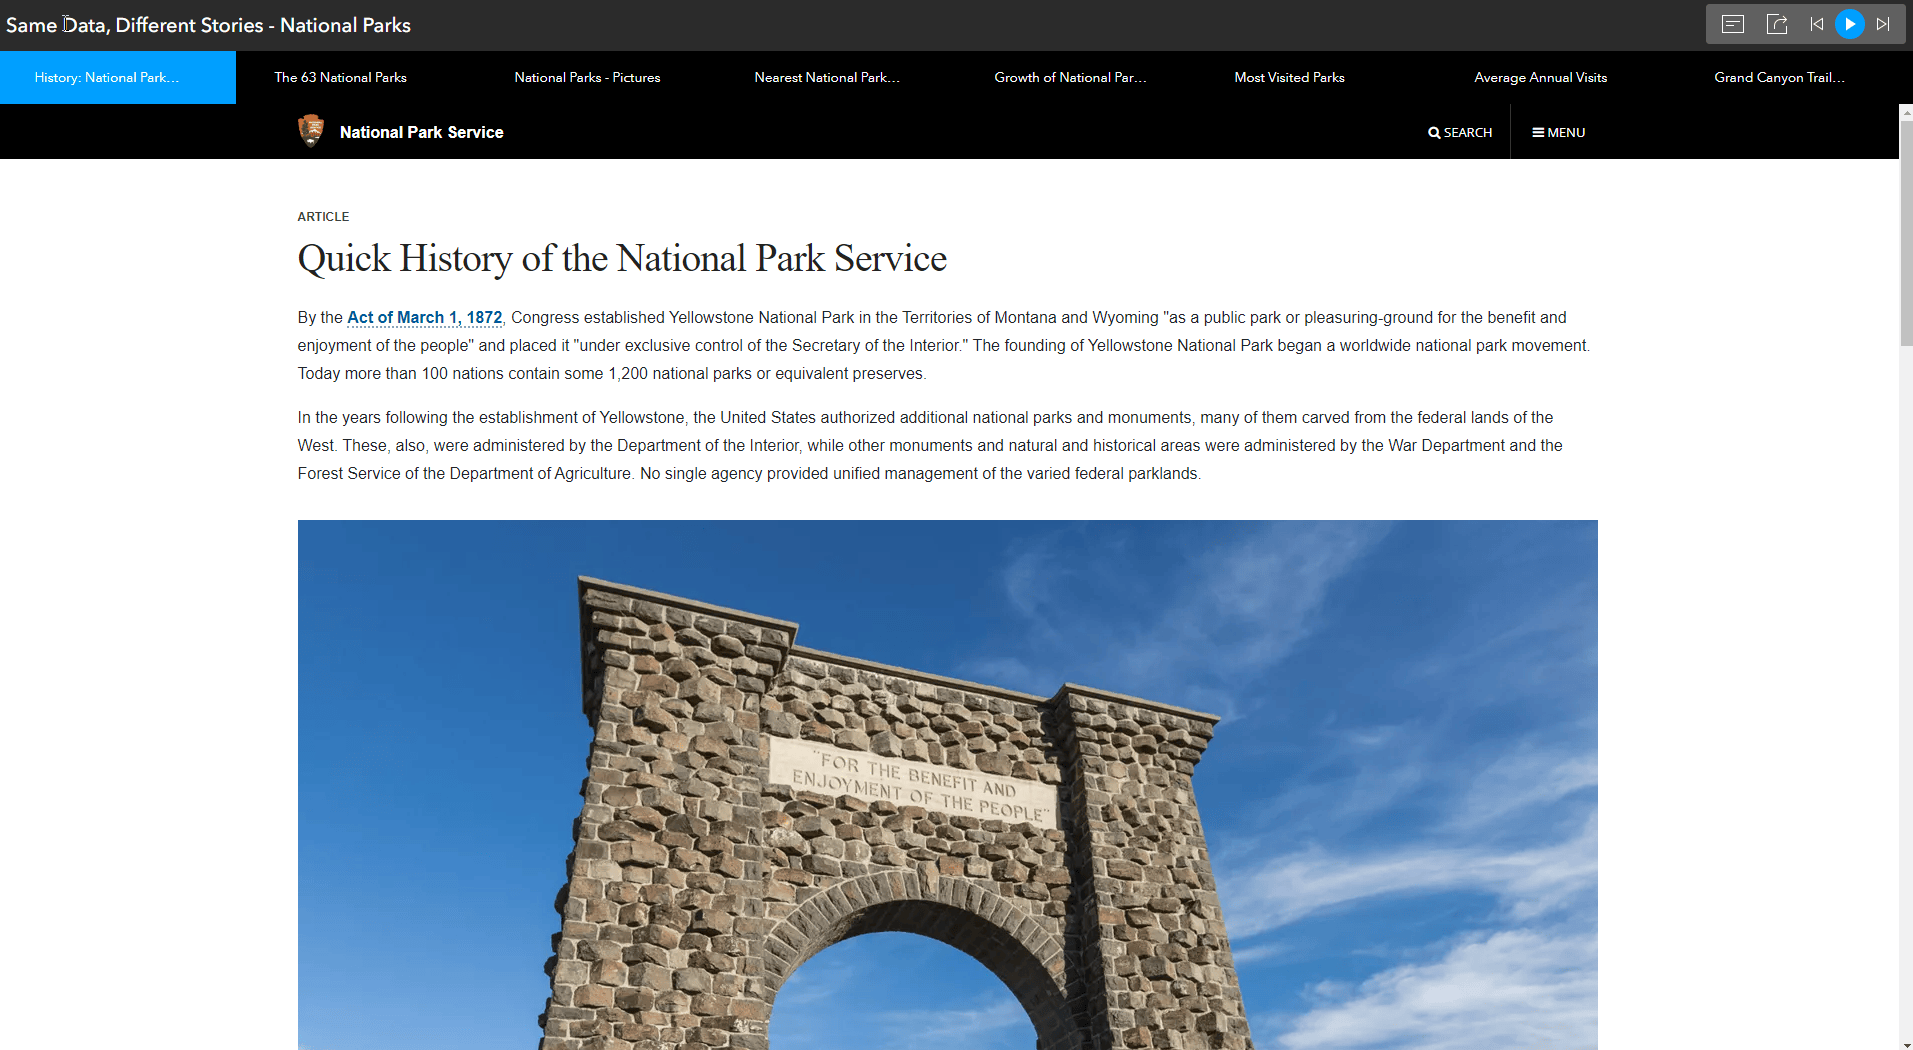 Portfolio app with related National Park data